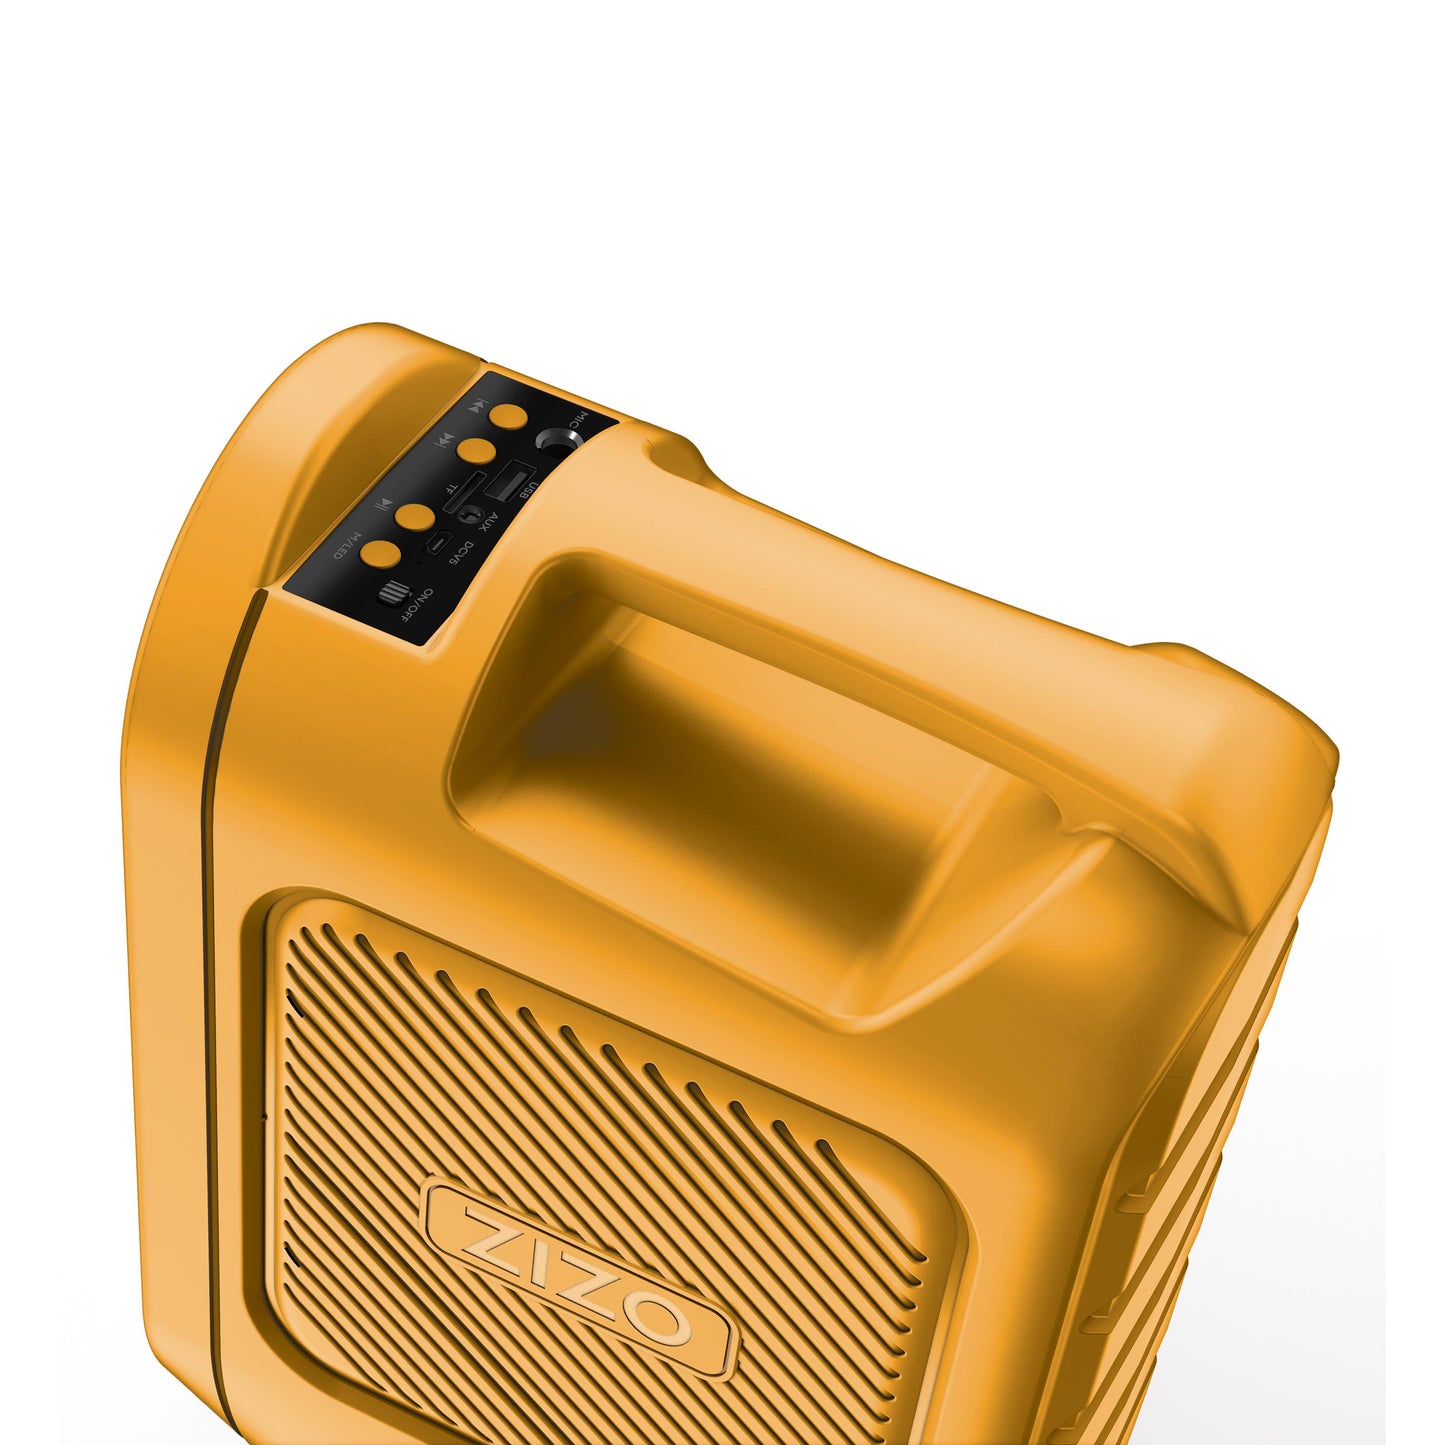 ZIZO Sonic Z4 Portable Wireless Speaker - Amber